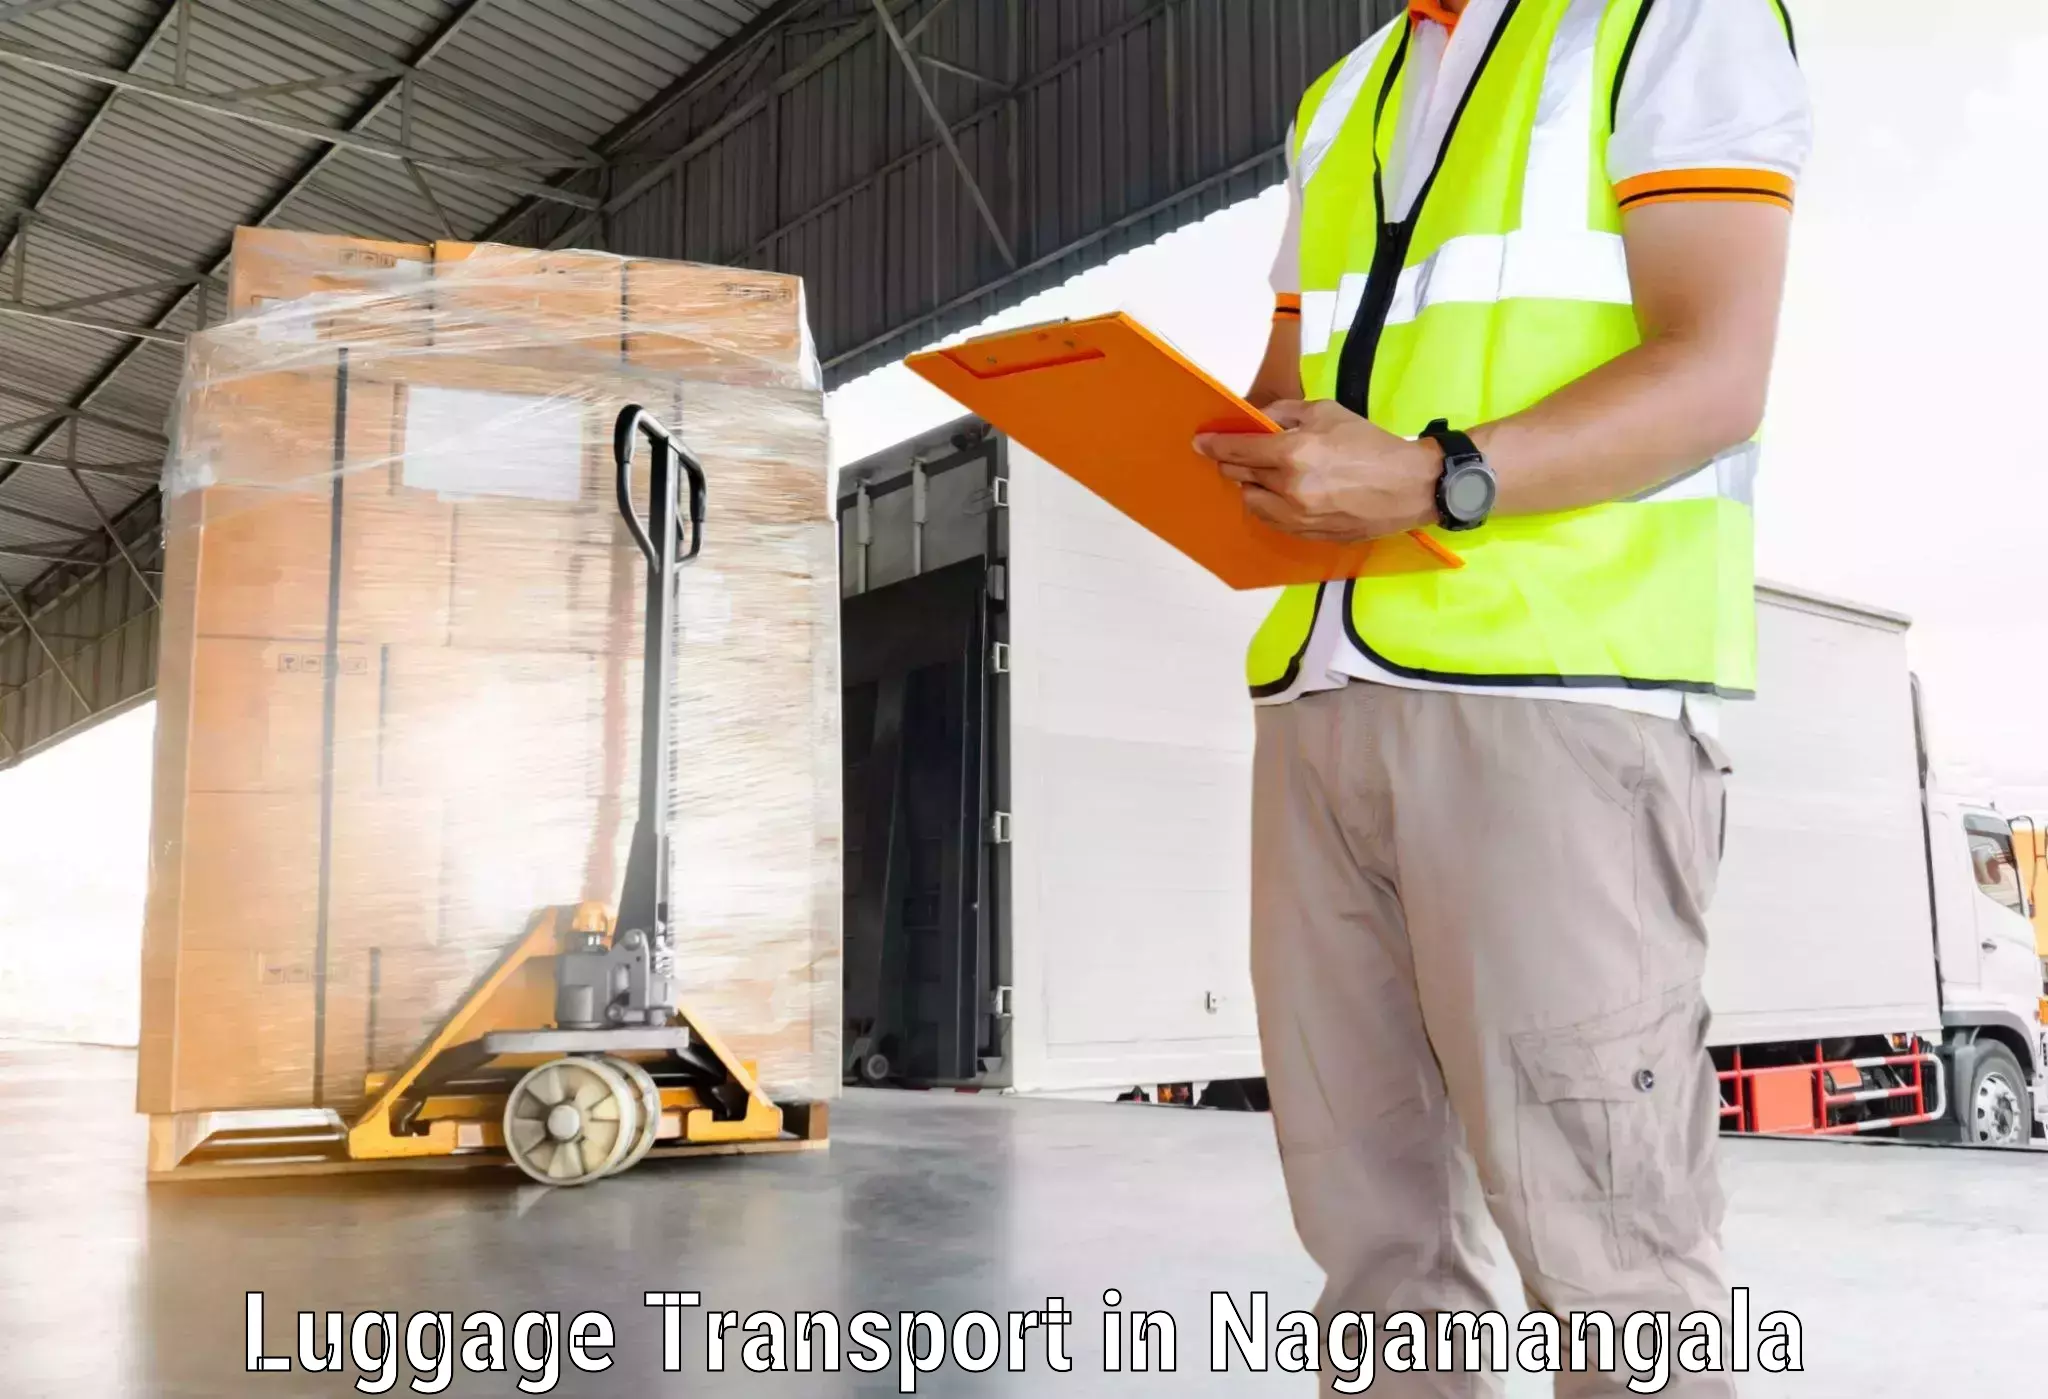 Doorstep luggage collection in Nagamangala